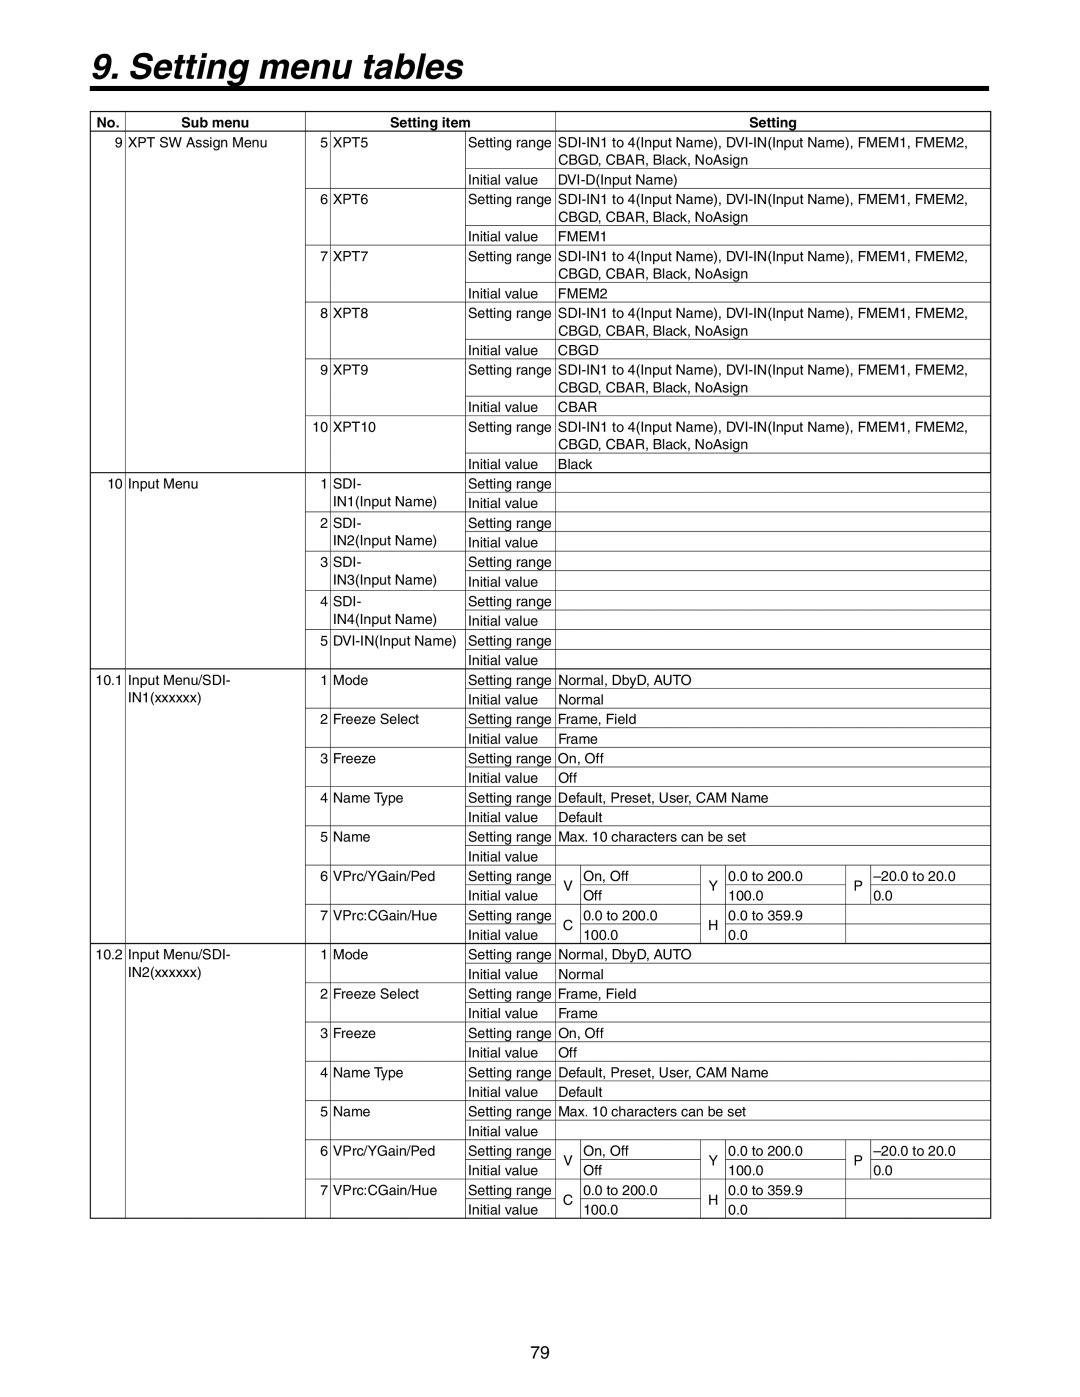 Panasonic AW-HS50N operating instructions Setting menu tables, XPT SW Assign Menu 10 Input Menu, Setting item 